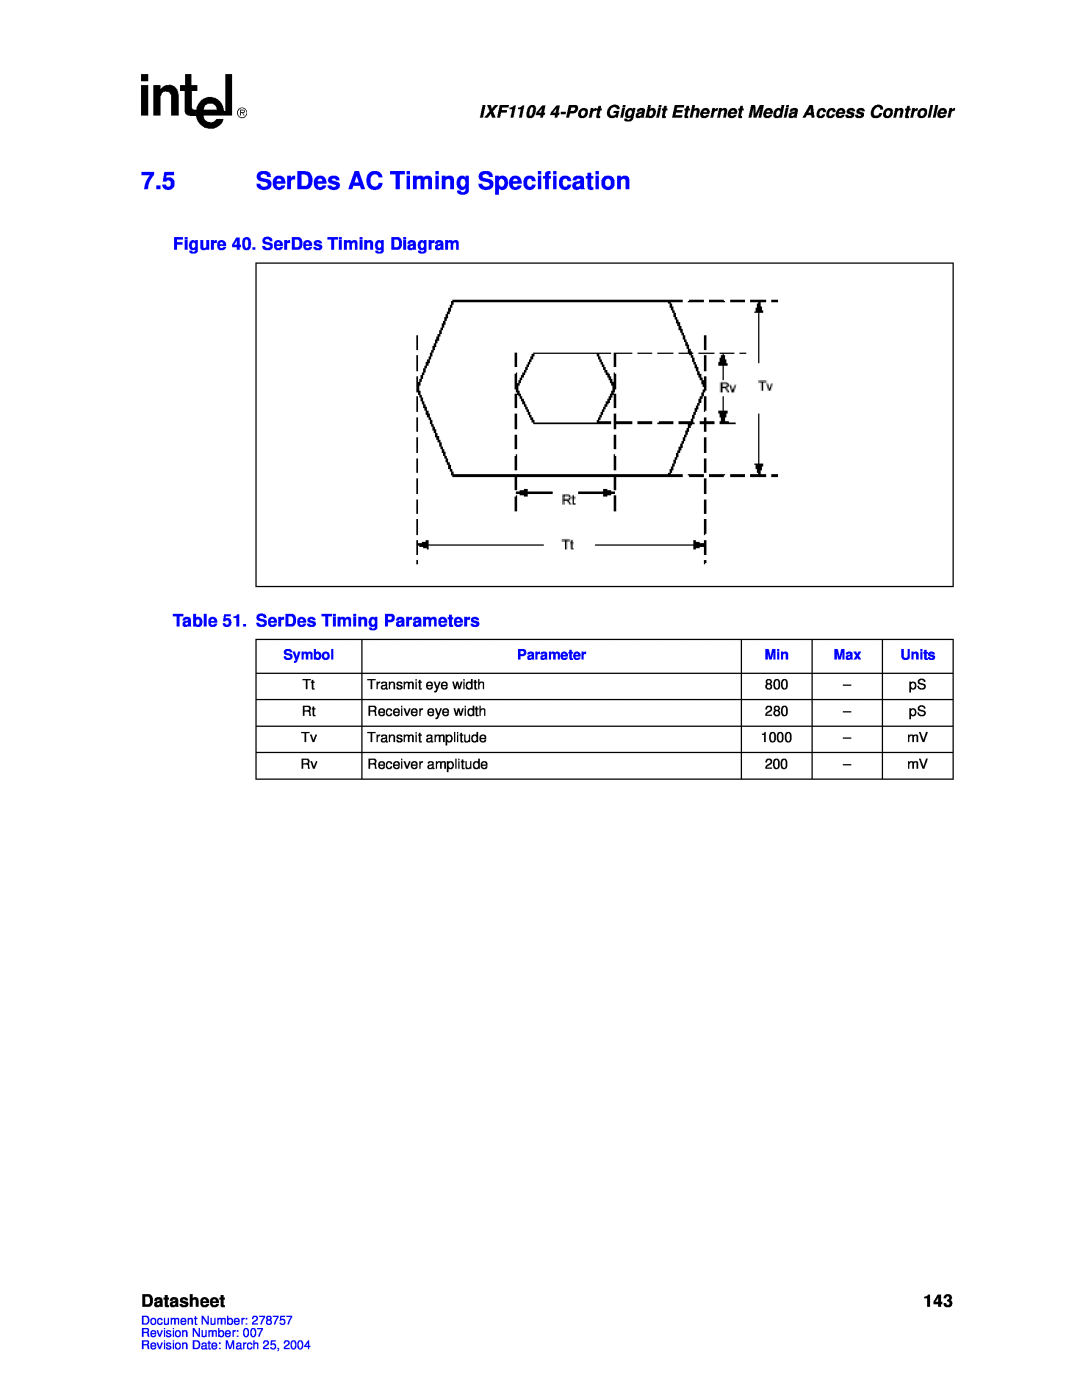 Intel IXF1104 manual 7.5SerDes AC Timing Specification, Datasheet 